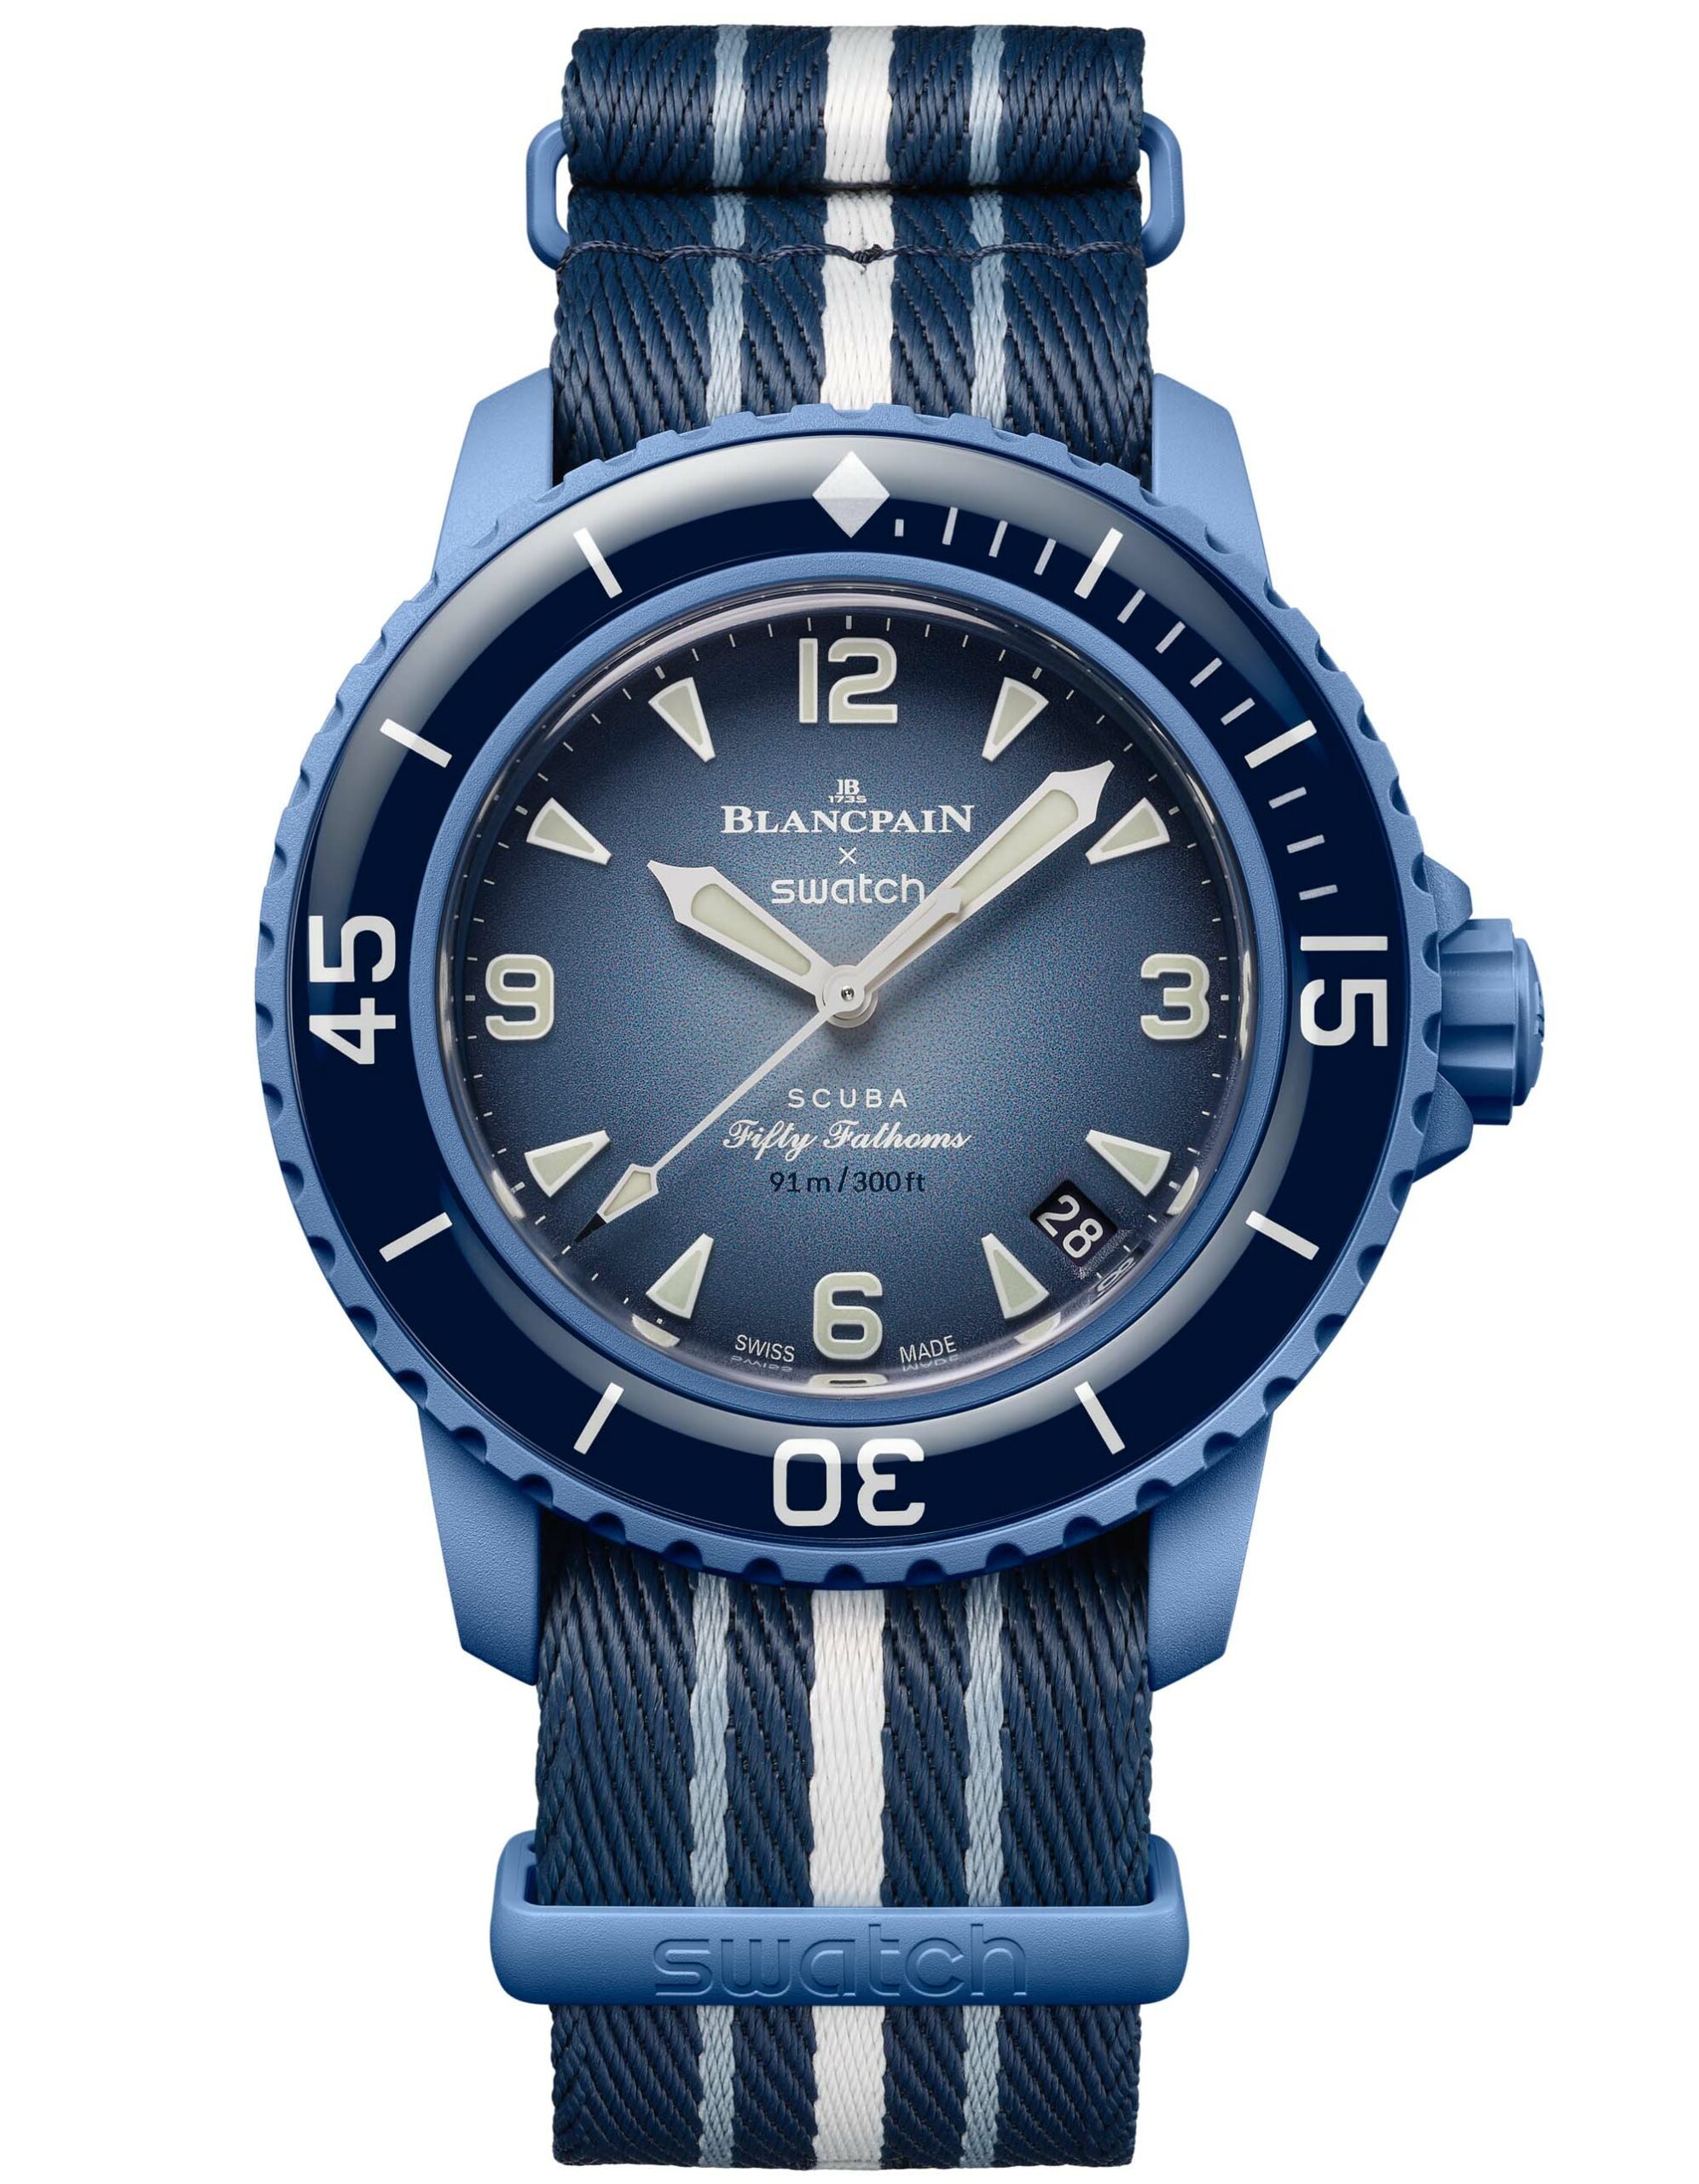 Blancpain X Swatch Bioceramic Scuba Fifty Fathoms Watches Expand